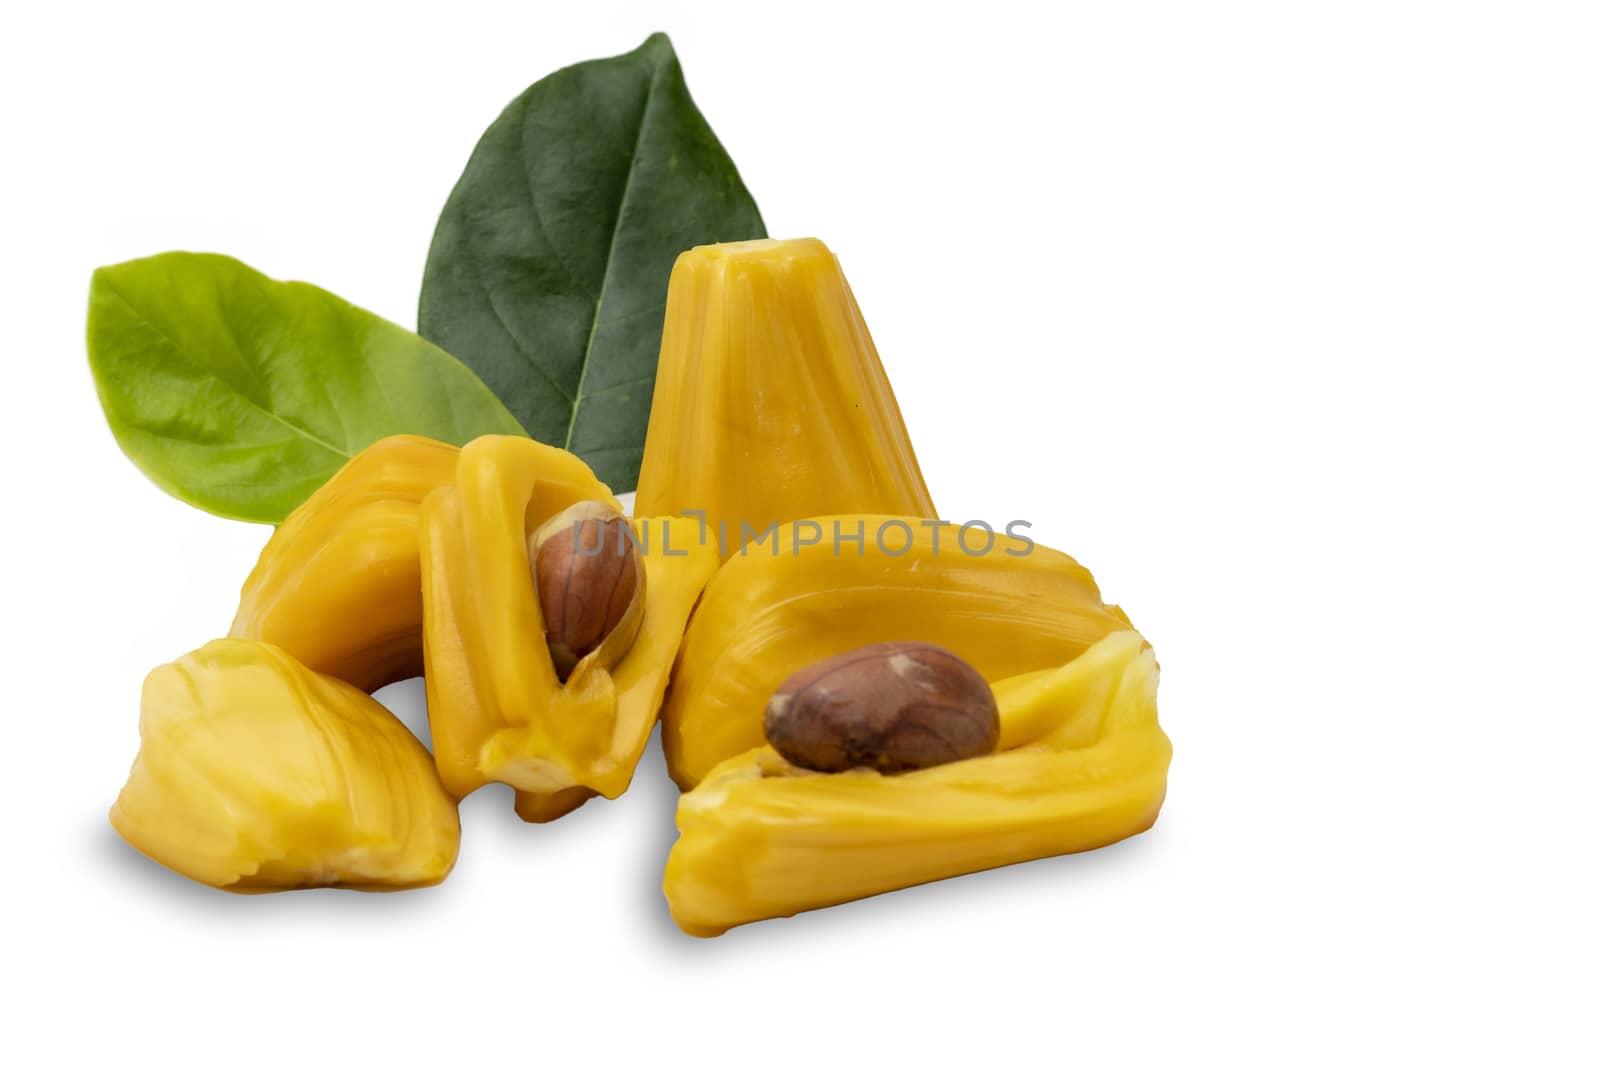 Jackfruit ripe yellow fruit flesh and green leaf isolated on whi by Khankeawsanan